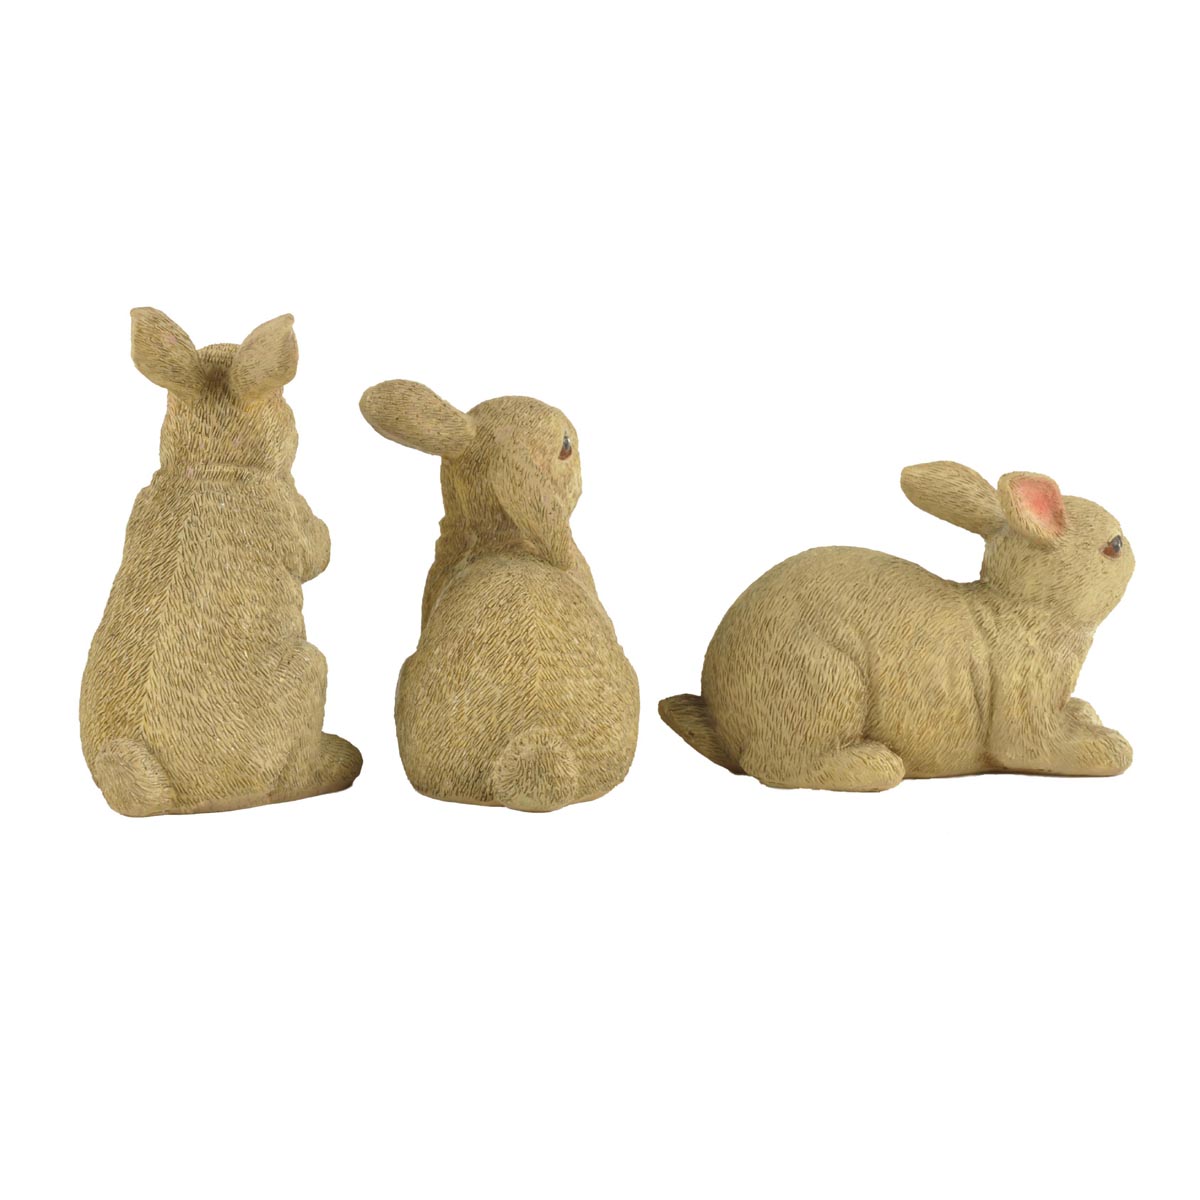 Ennas decorative easter rabbit figurines polyresin home decor-1